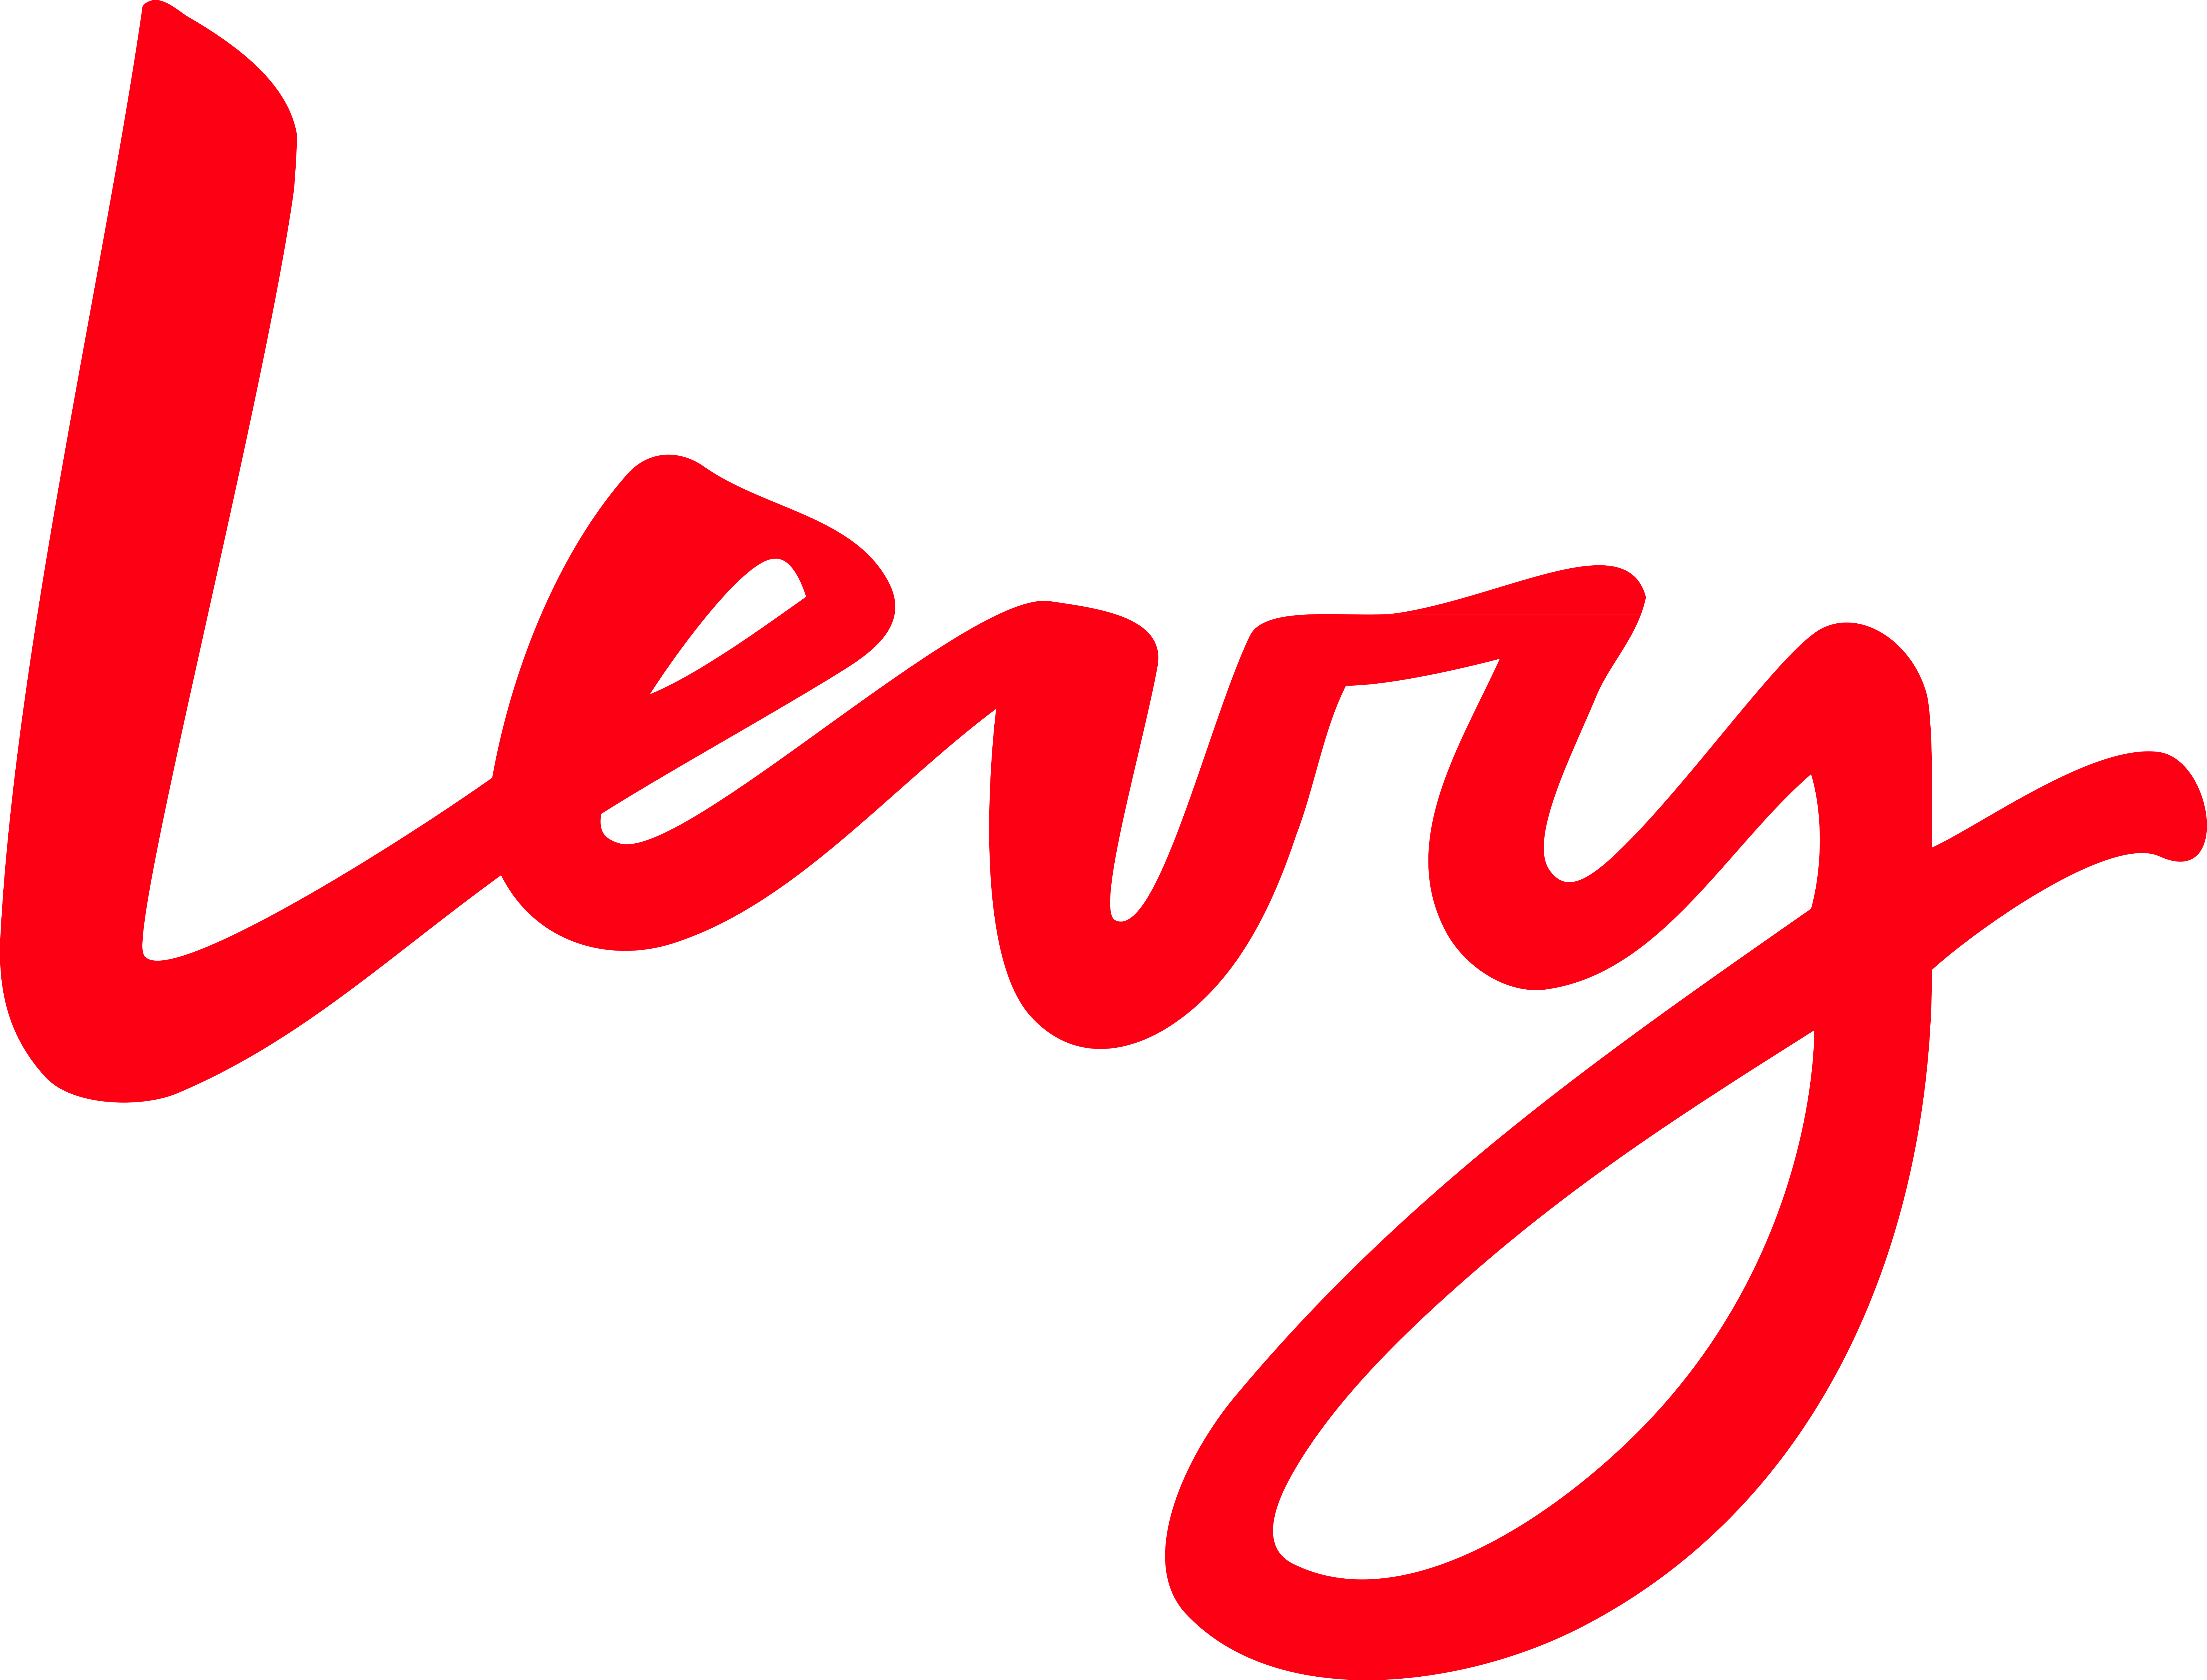 Levy Restaurants Logo